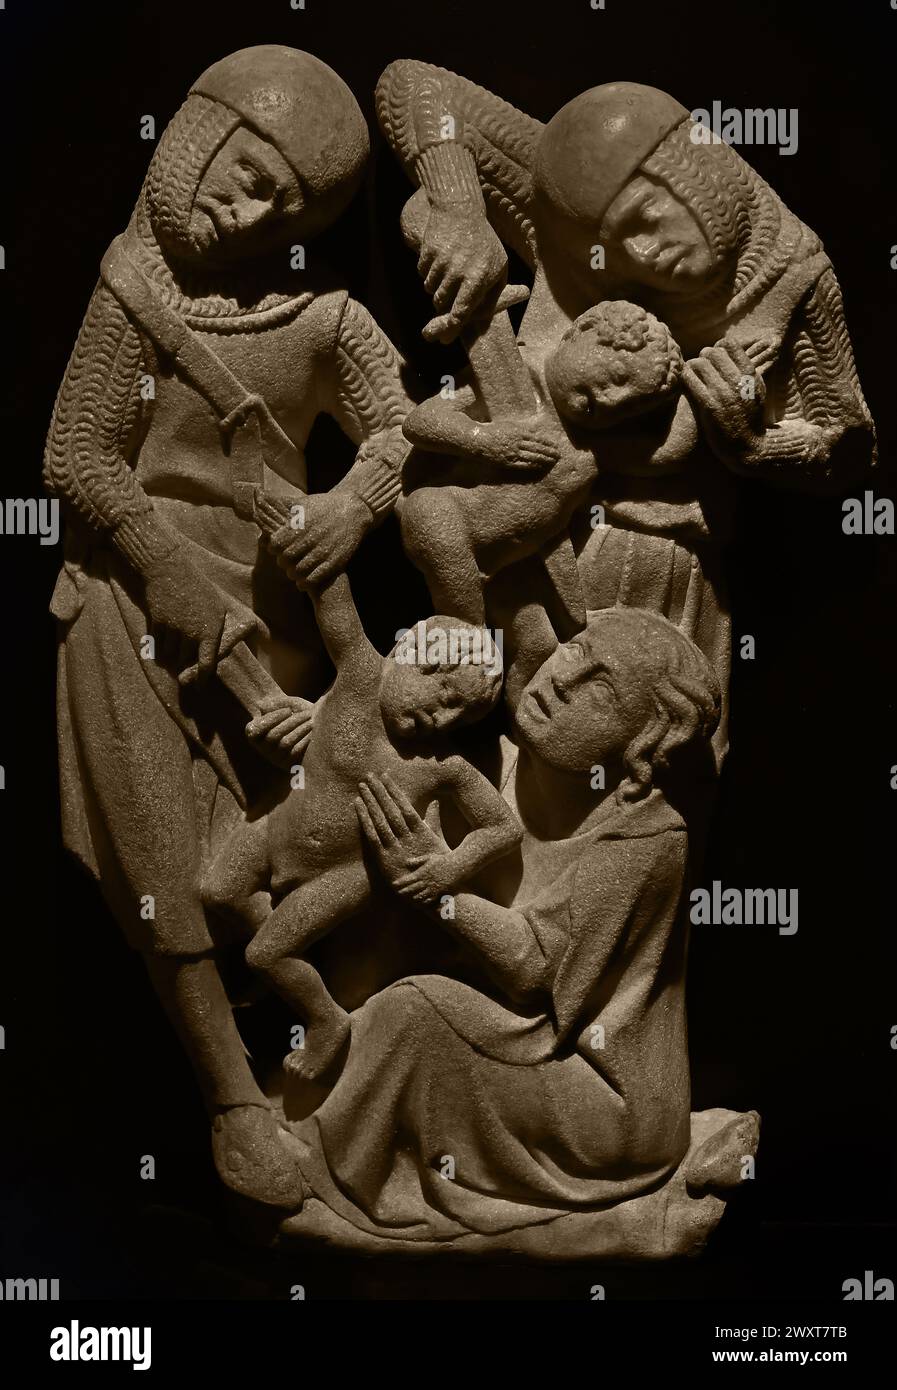 Kindermord in Bethlehem 1300 - 1349 unbekannt (Bildhauer) Museum Mayer van den Bergh, Antwerpen, Belgien, Belgien. Stockfoto